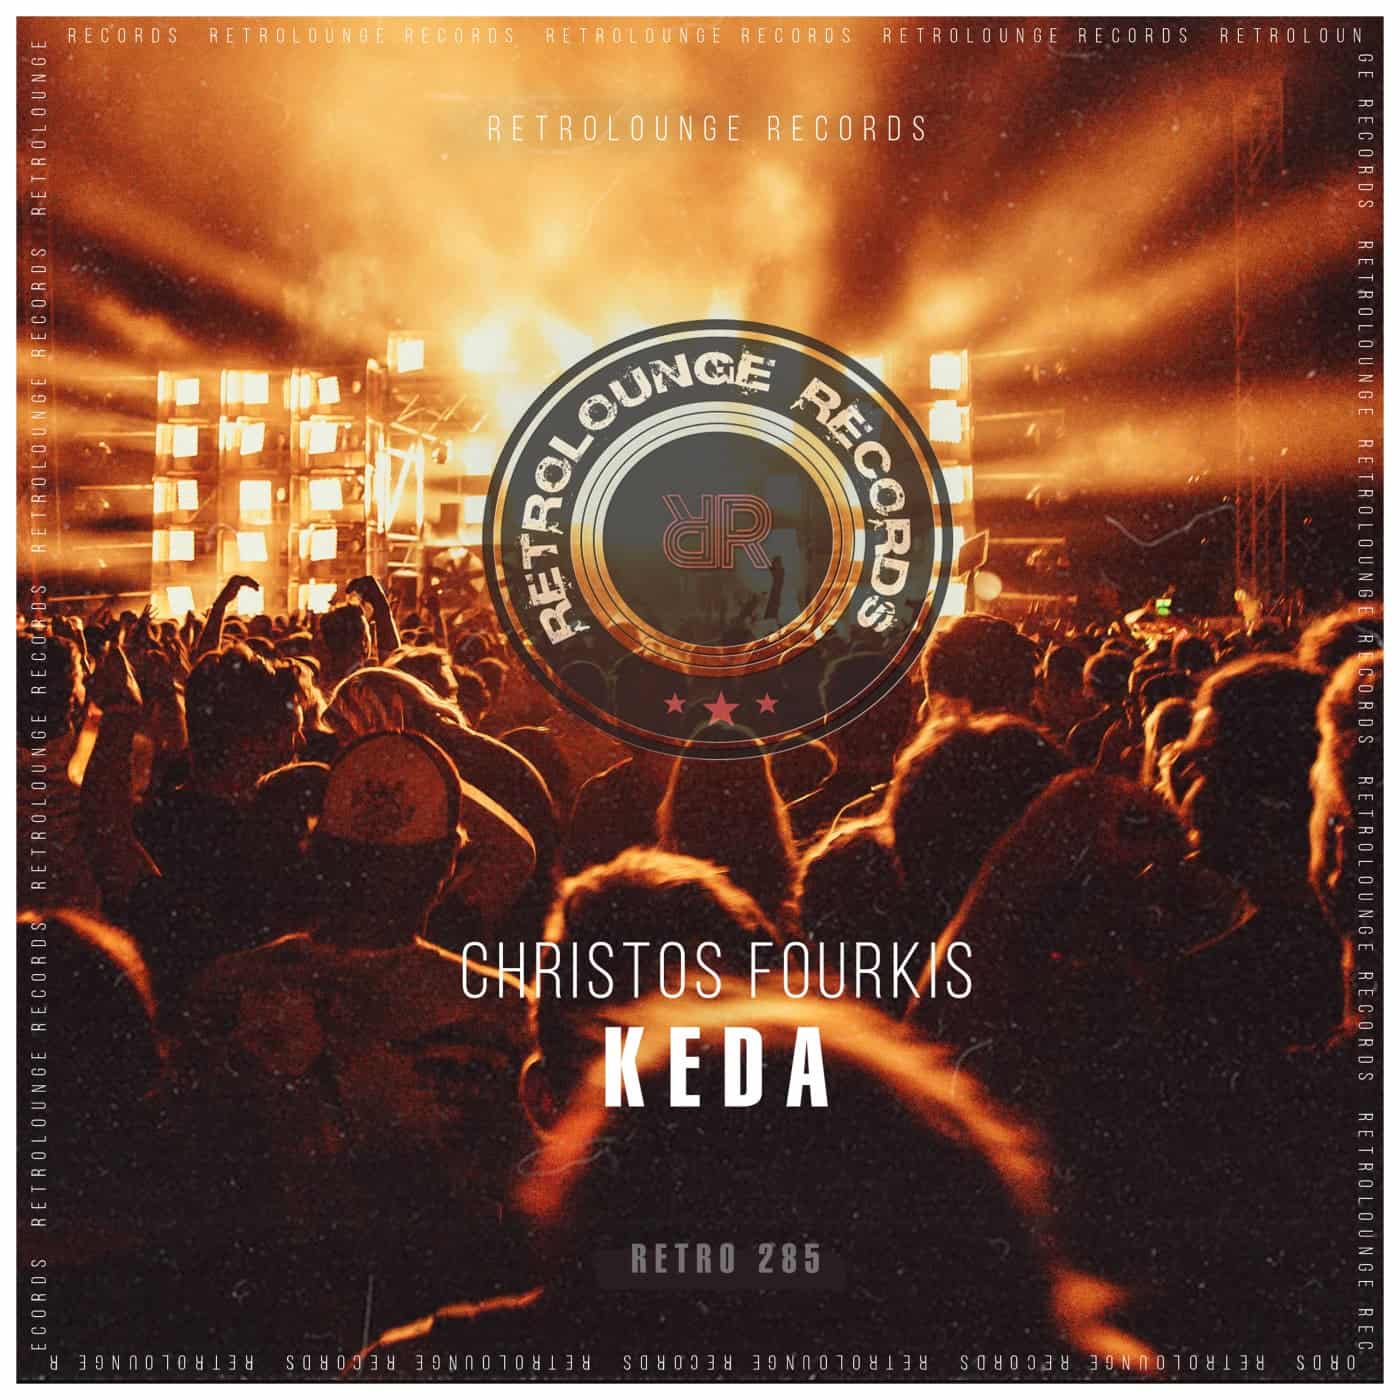 image cover: Christos Fourkis - Keda on Retrolounge Records